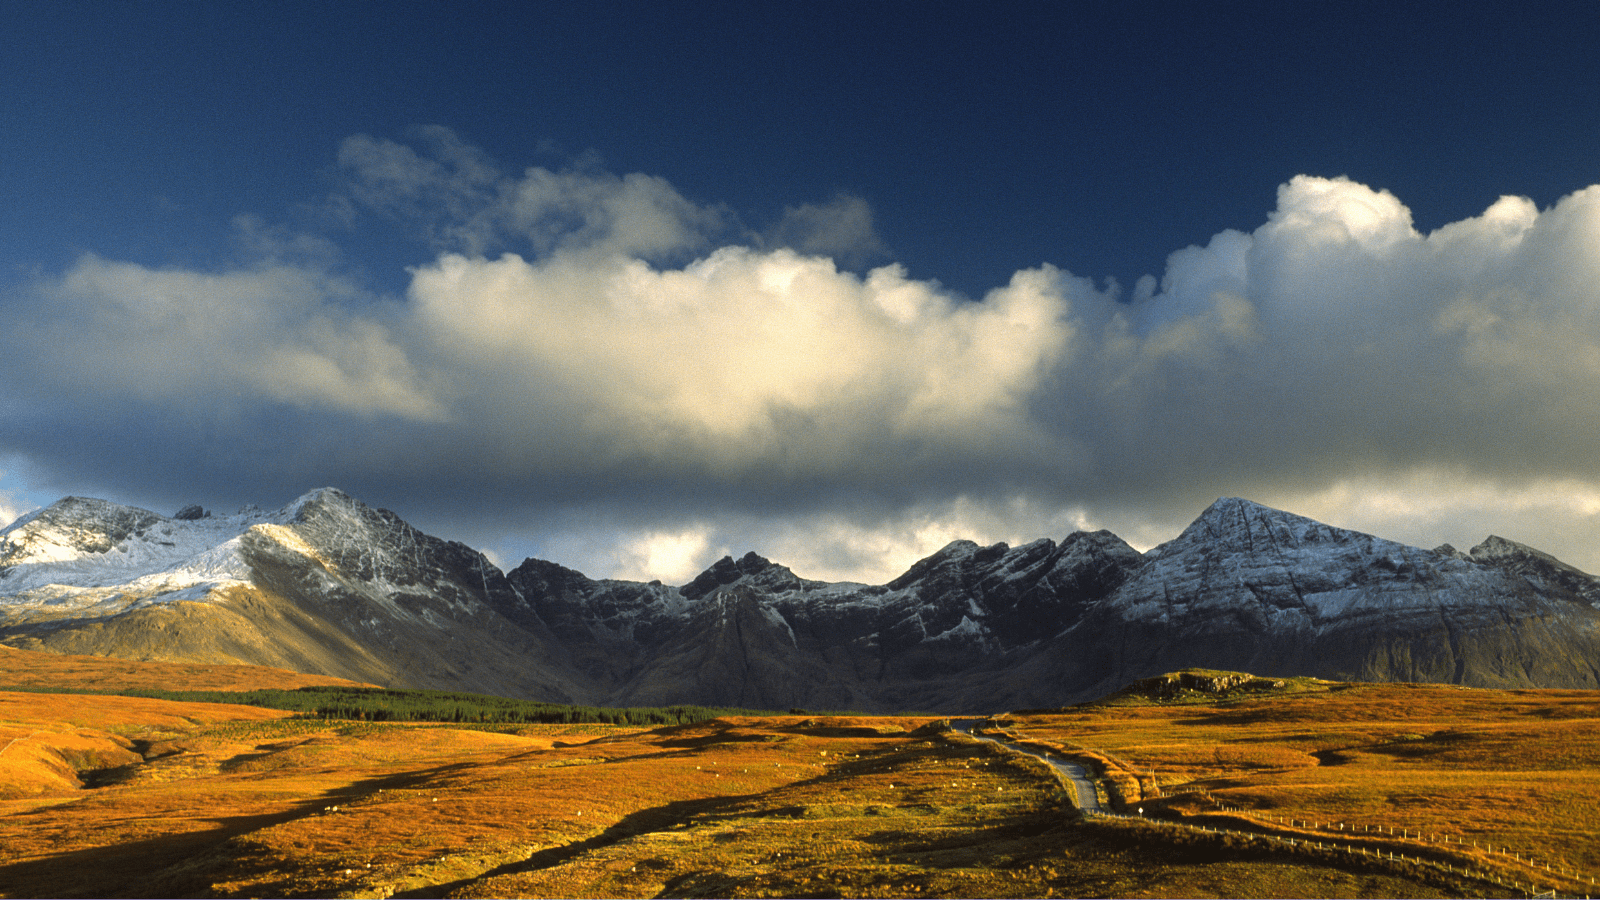 Mountain scene in Scotland